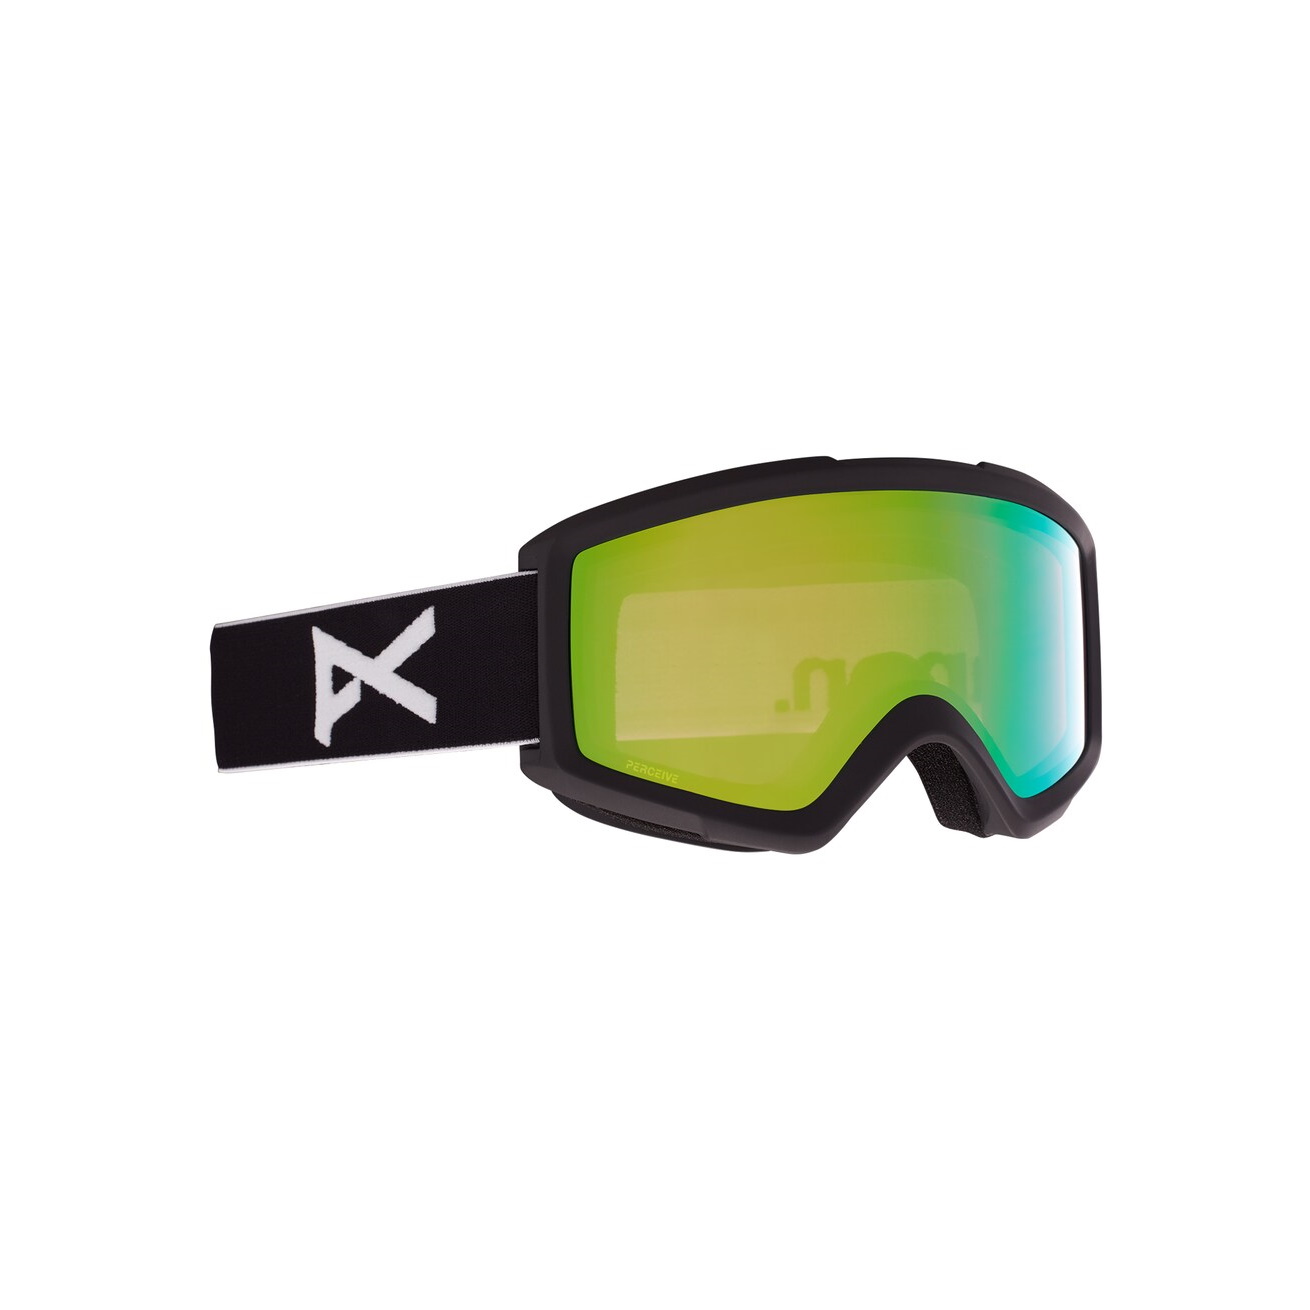 Helix 2.0 Goggles PERCEIVE + Spare Lens Black/Prcv Vrbl Grn